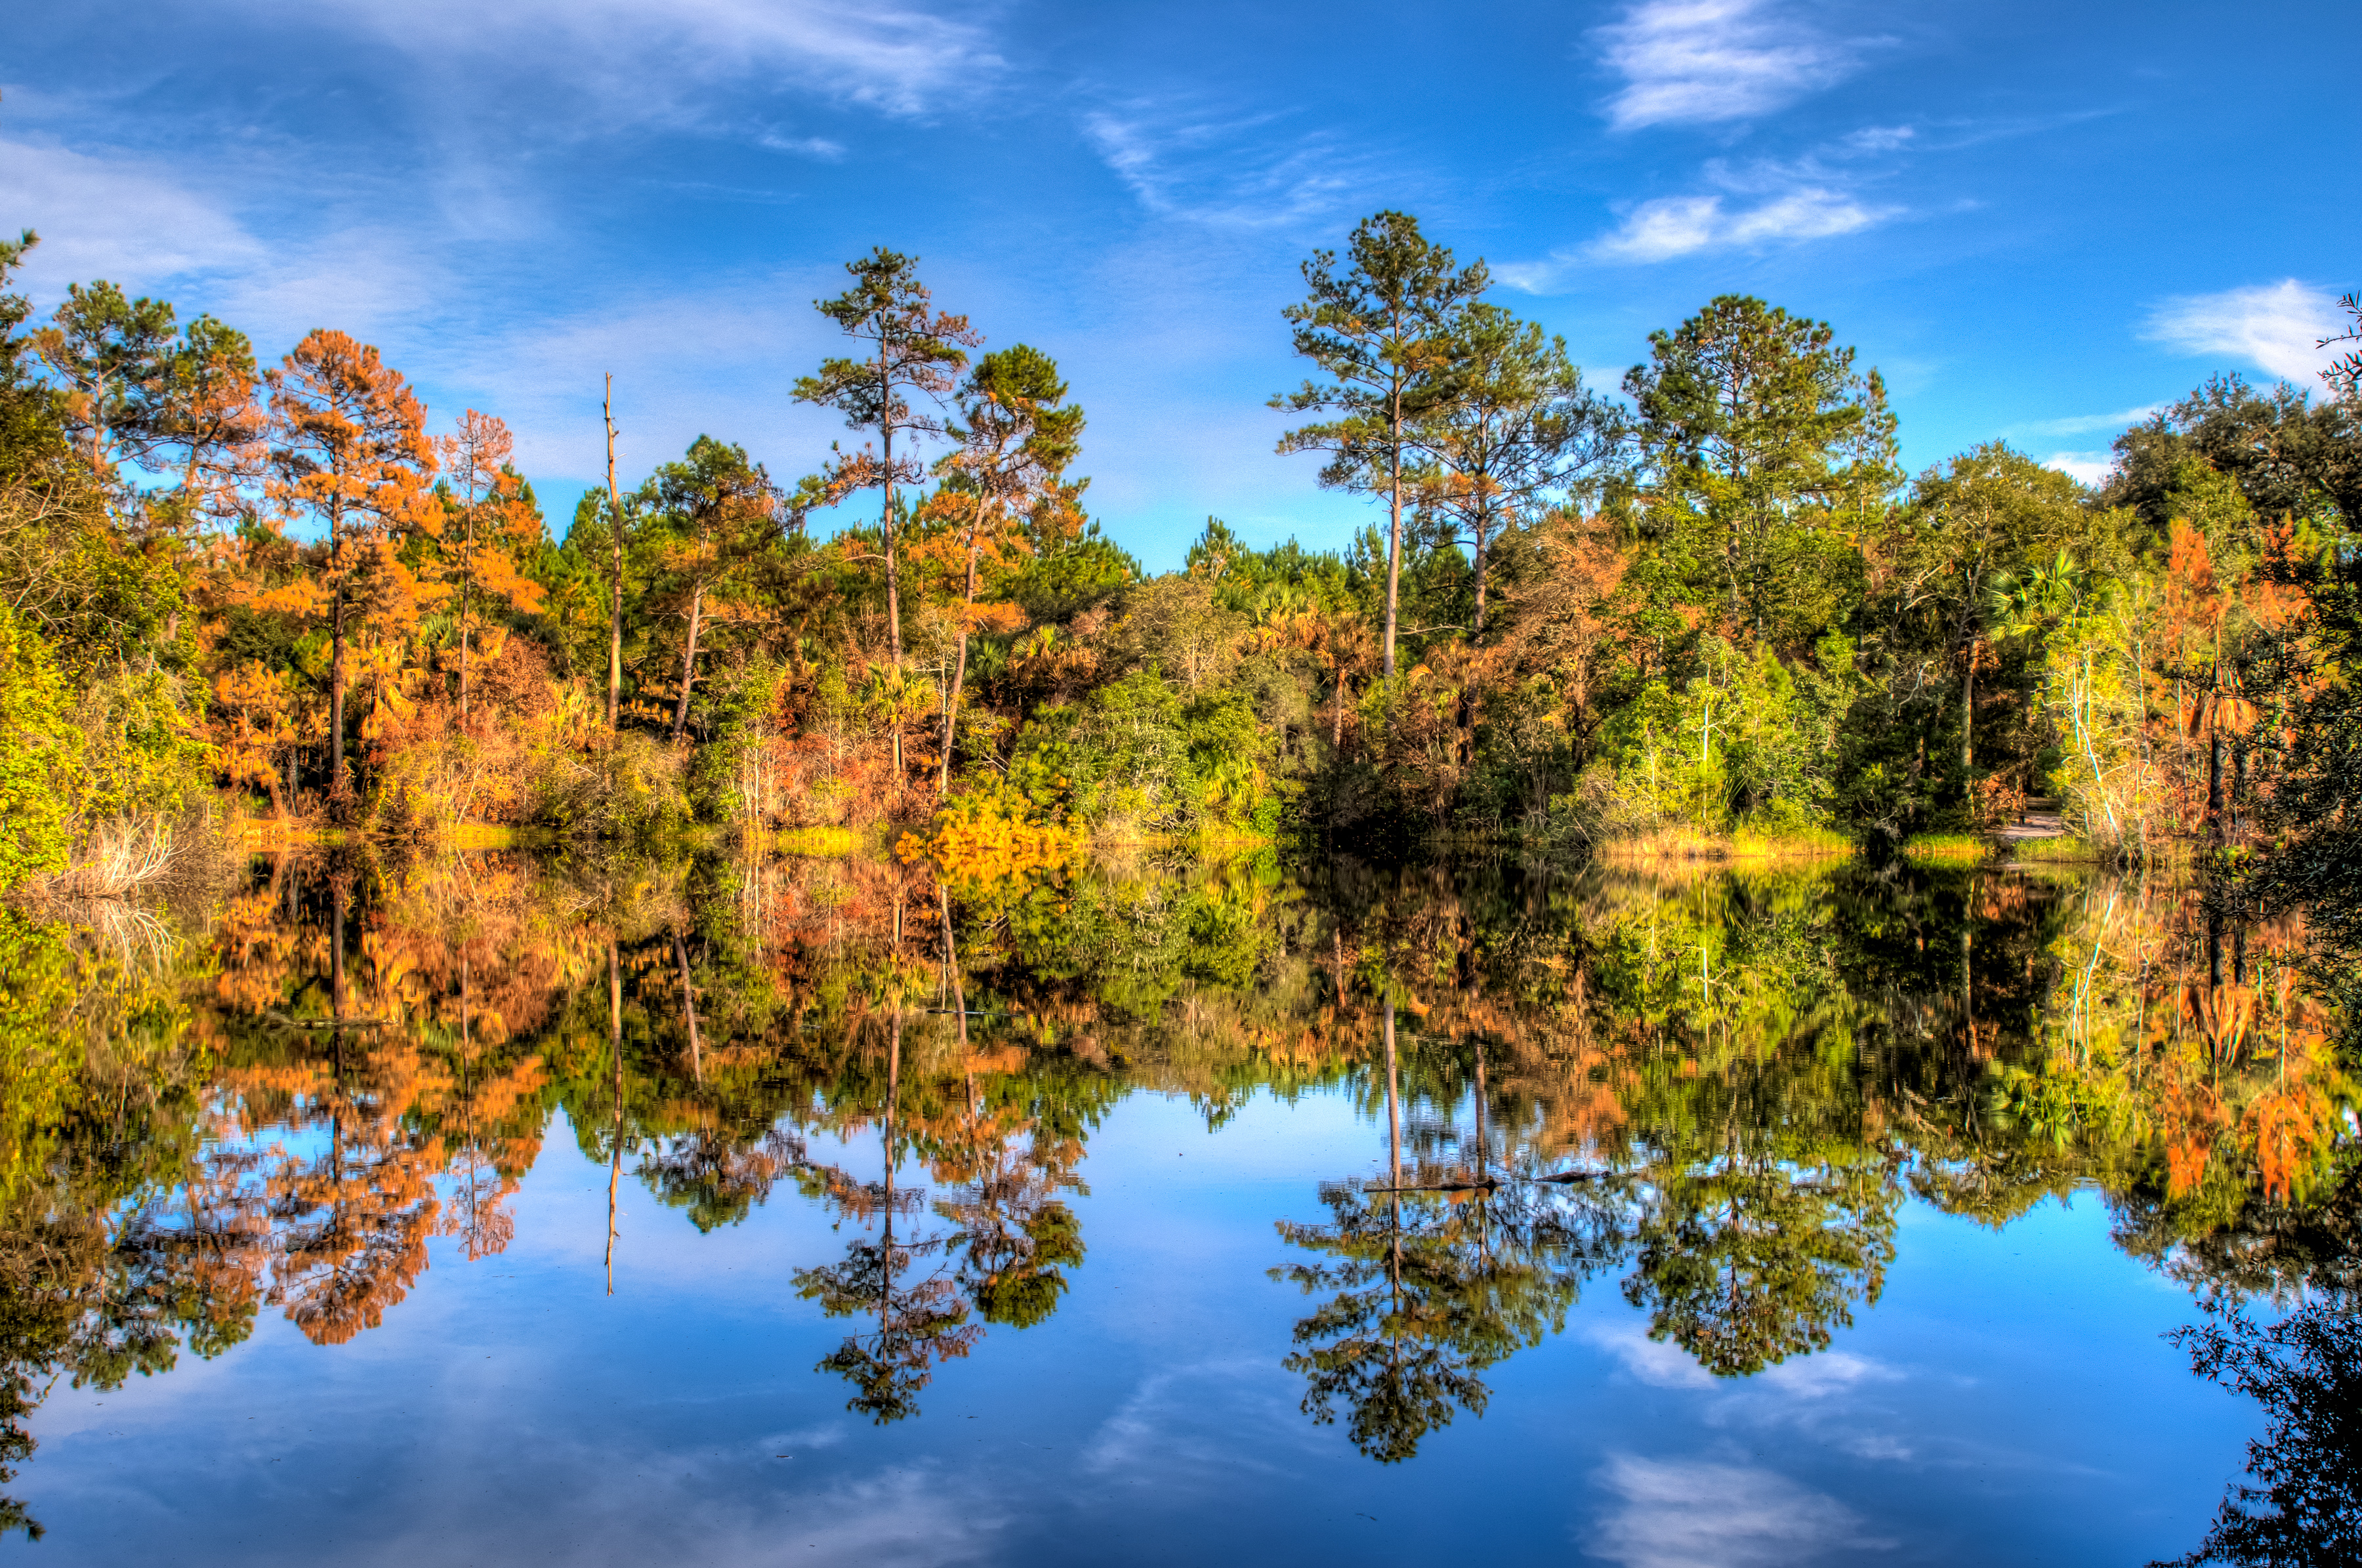 Florida Fall Scene - Image Credit: Flickr/Rain0975